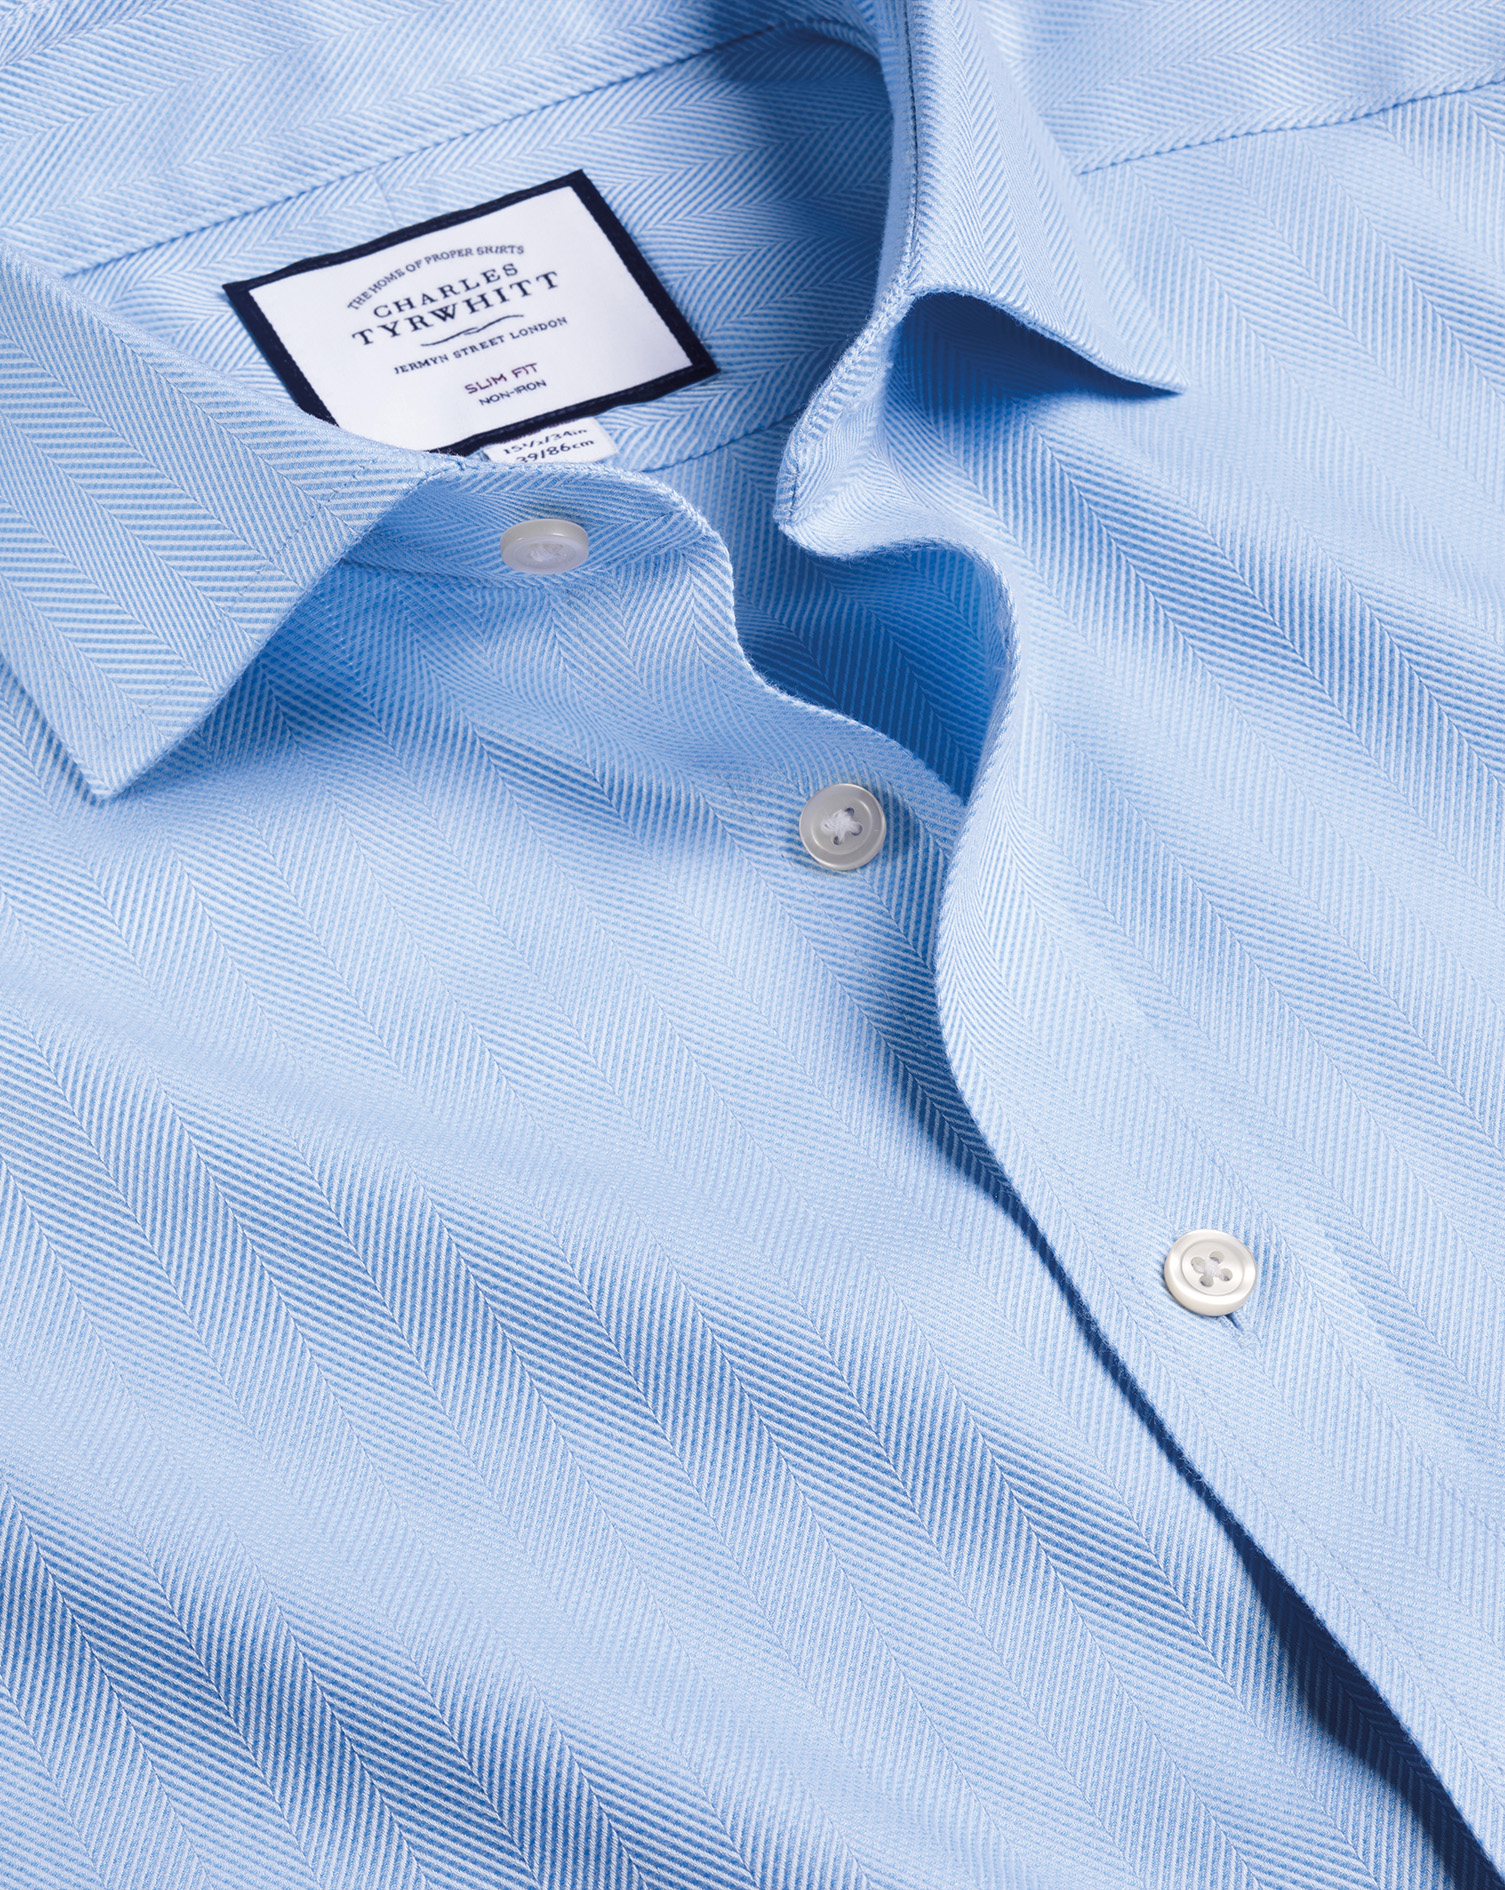 Men's Charles Tyrwhitt Cutaway Collar Non-Iron Herringbone Dress Shirt - Sky Blue French Cuff Size S